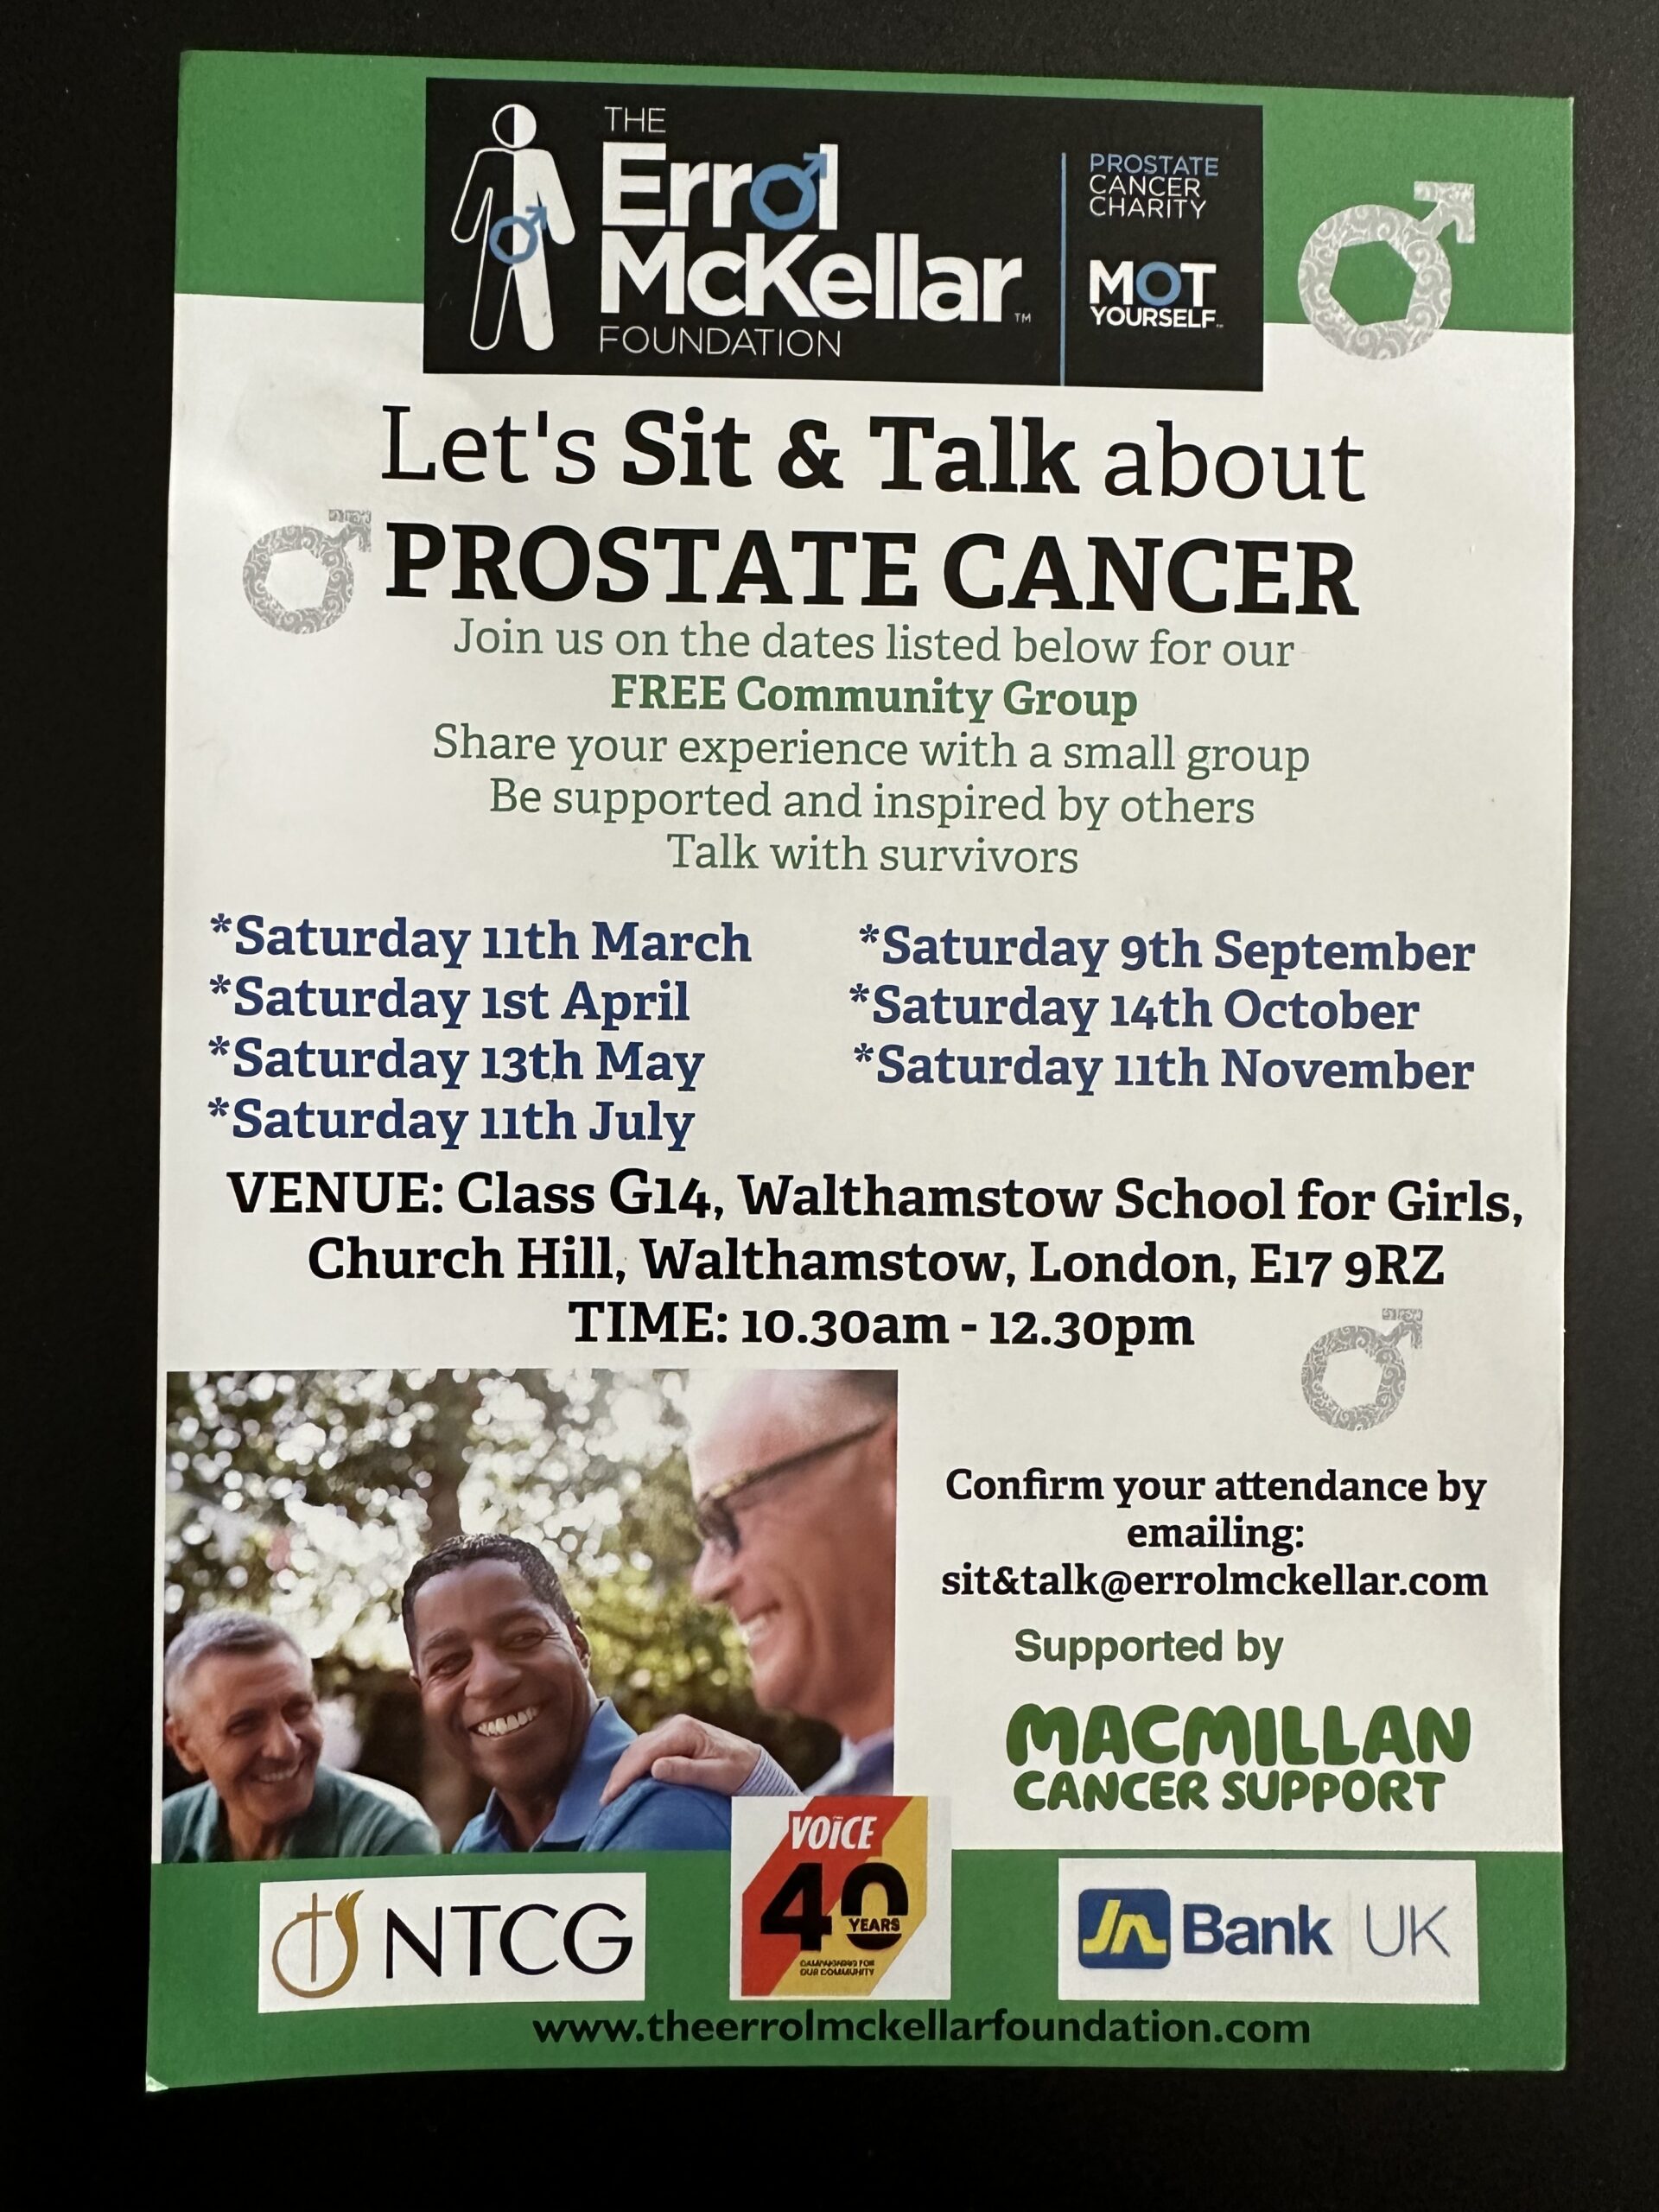 The Errol McKellar Foundation Let’s Sit & Talk about PROSTATE CANCER